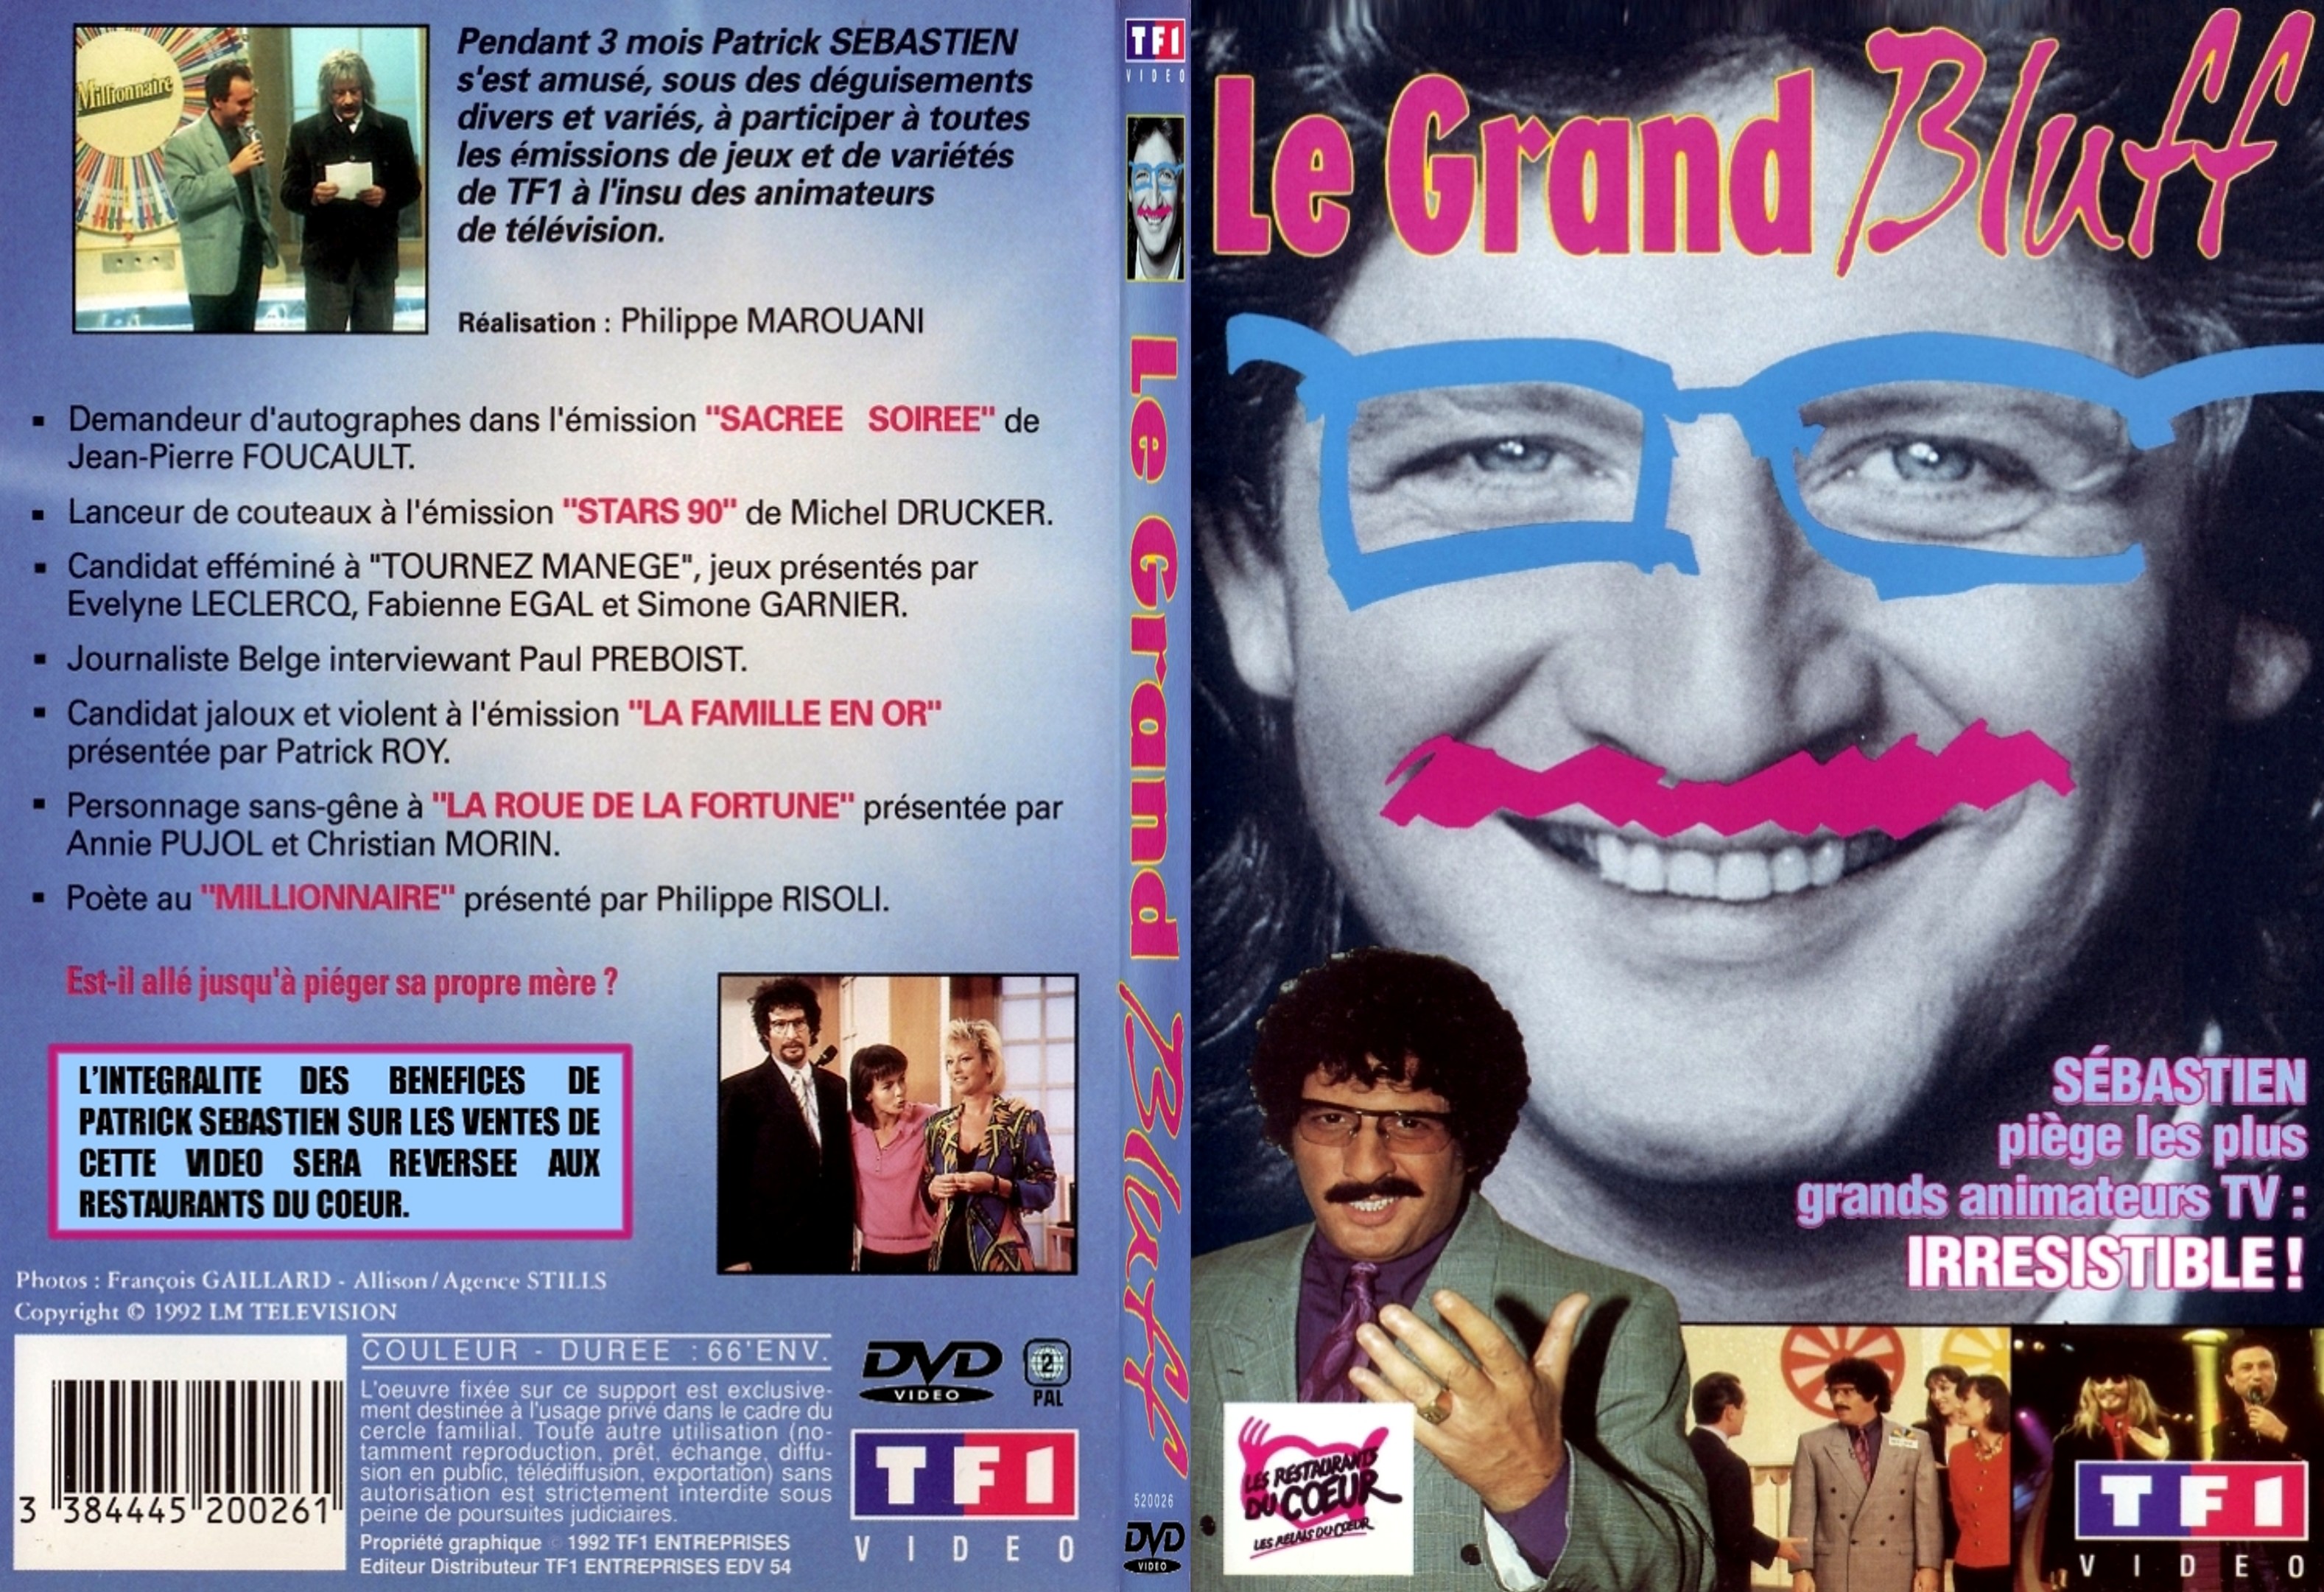 Jaquette DVD Le grand bluff (Patrick Sebastien) custom - SLIM